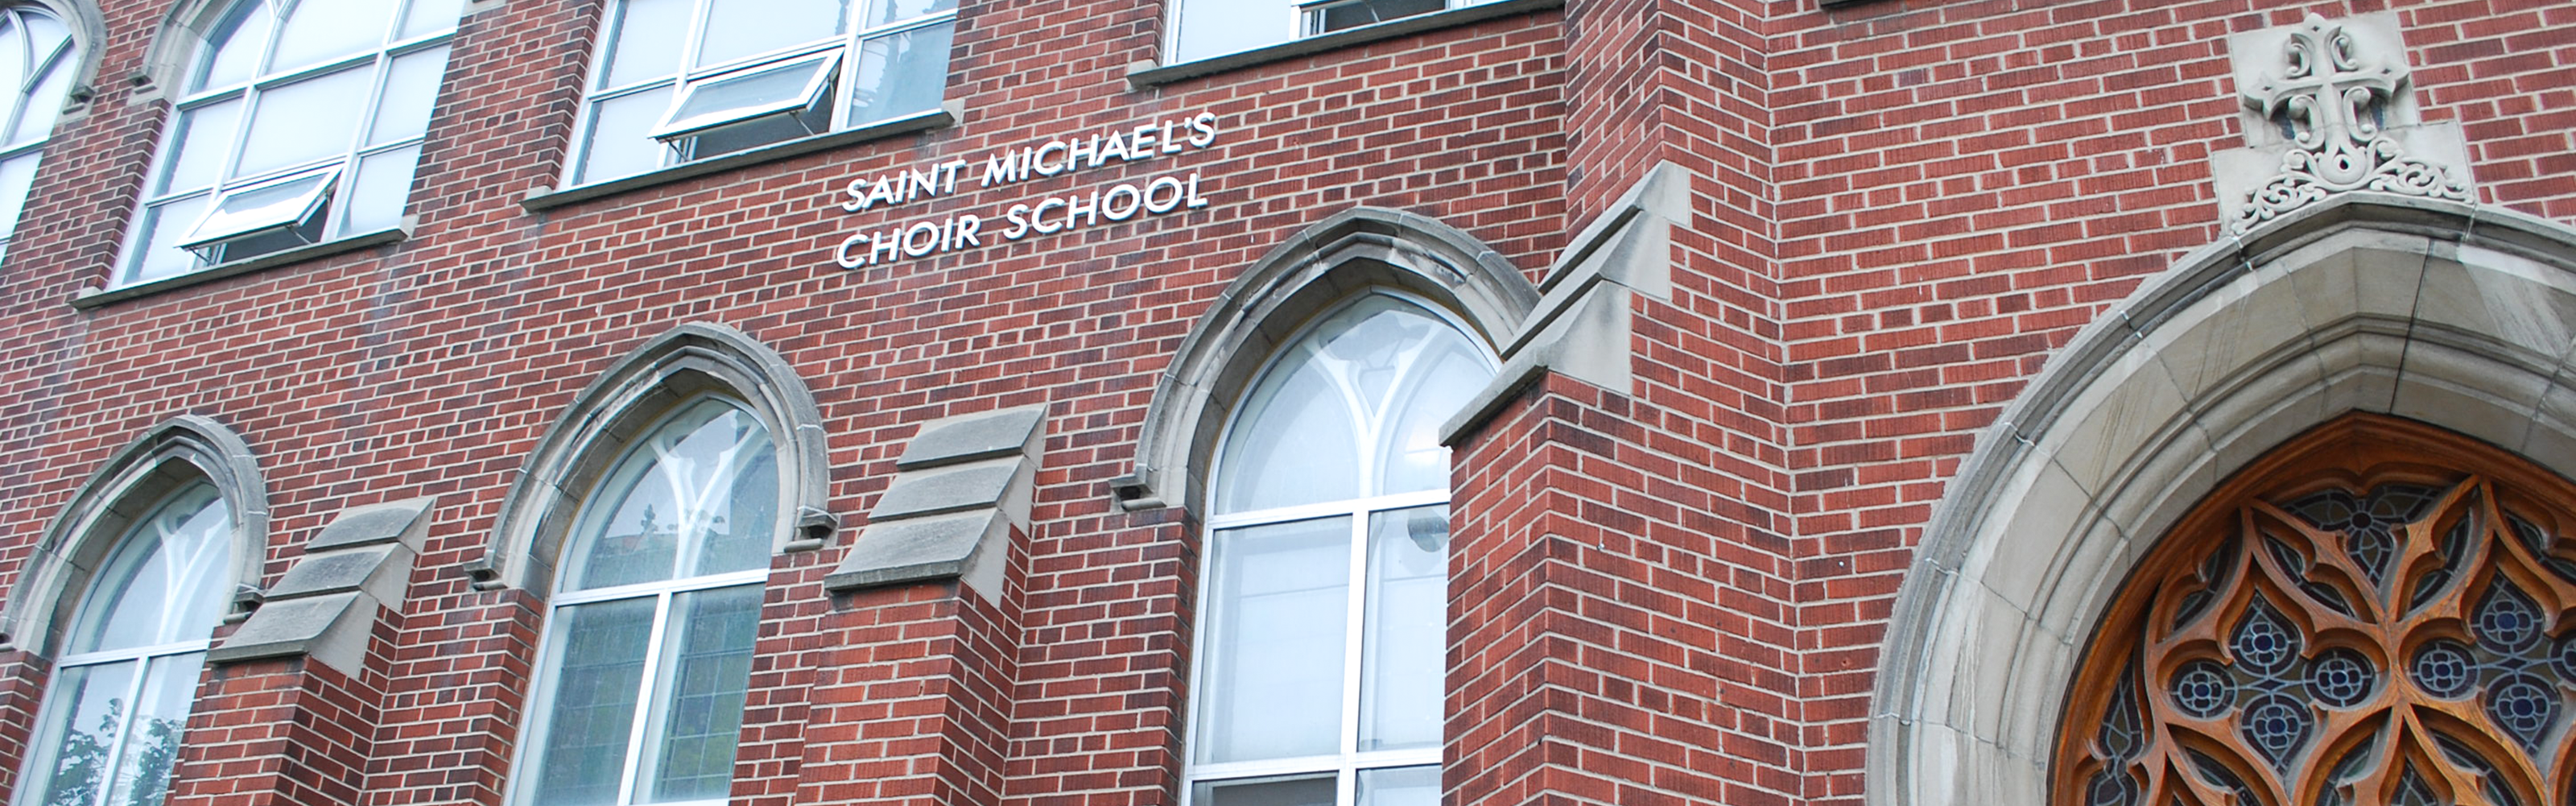 Front of the St. Michael's Choir School school building.